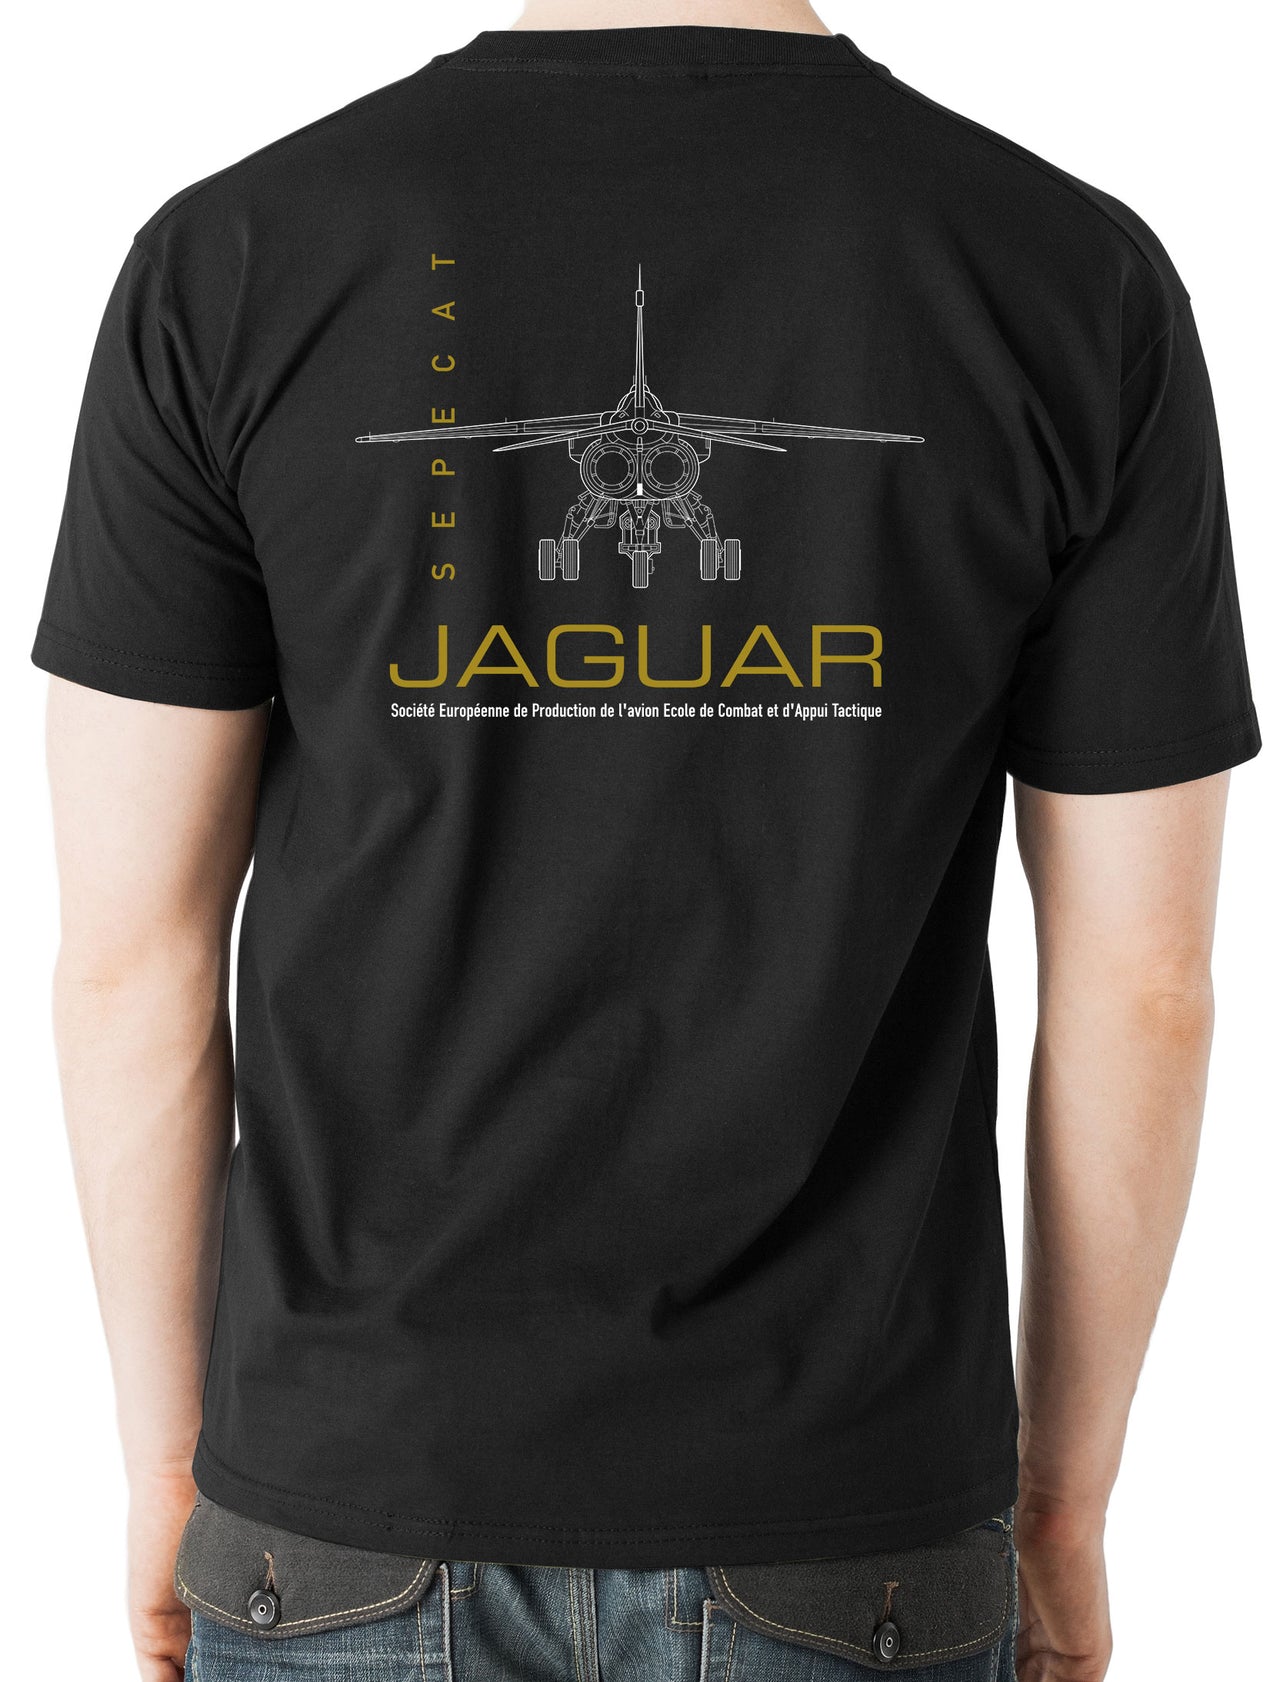 Jaguar - T-shirt